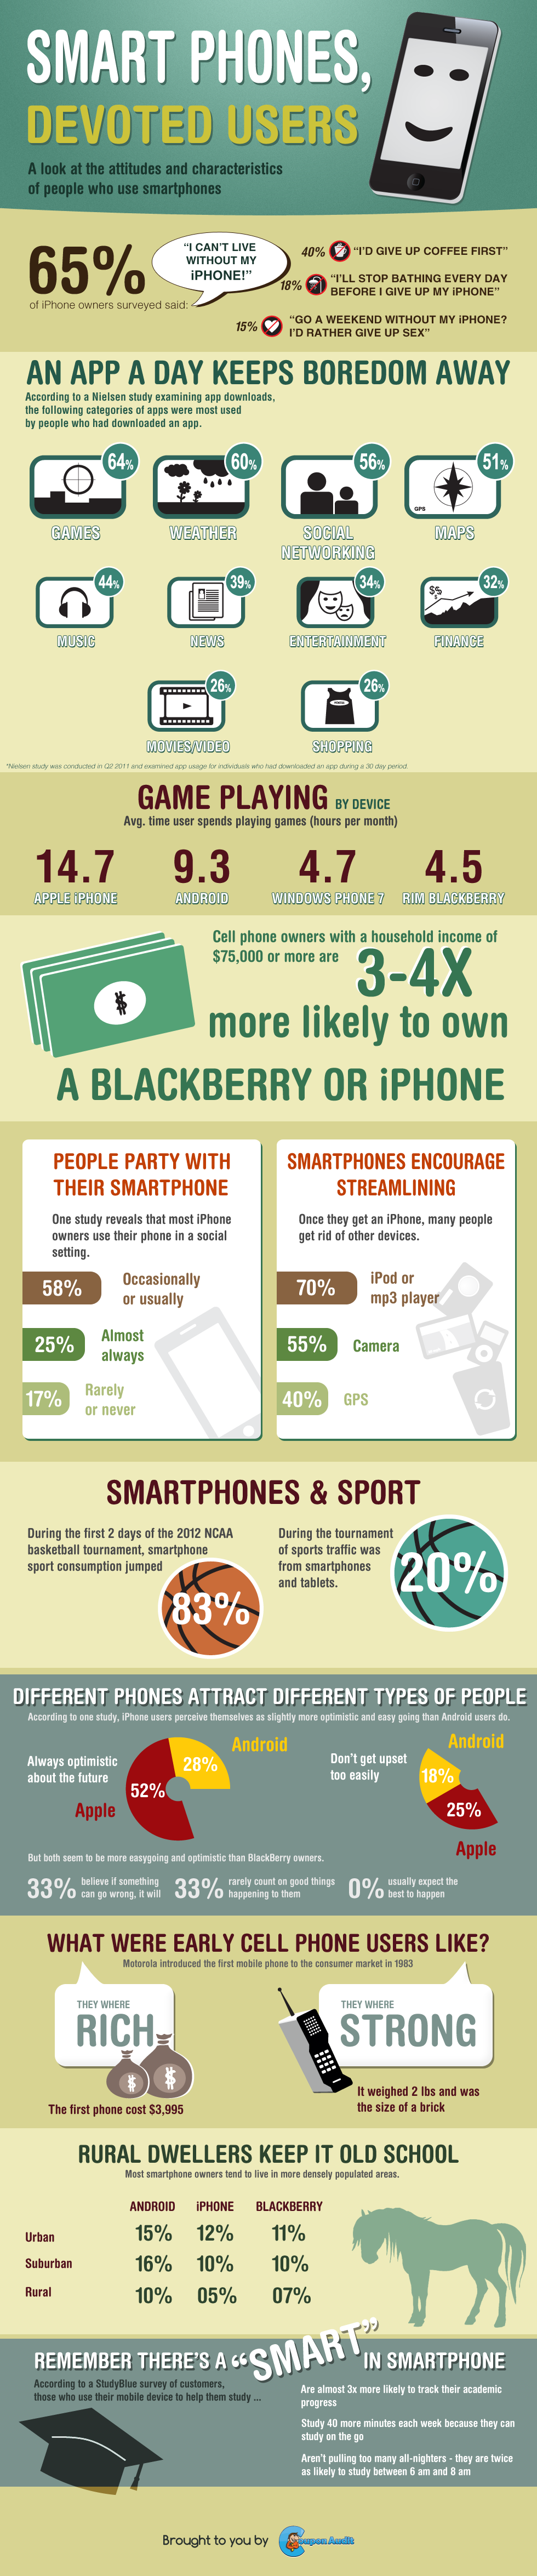 Smart Phones, Devoted Users